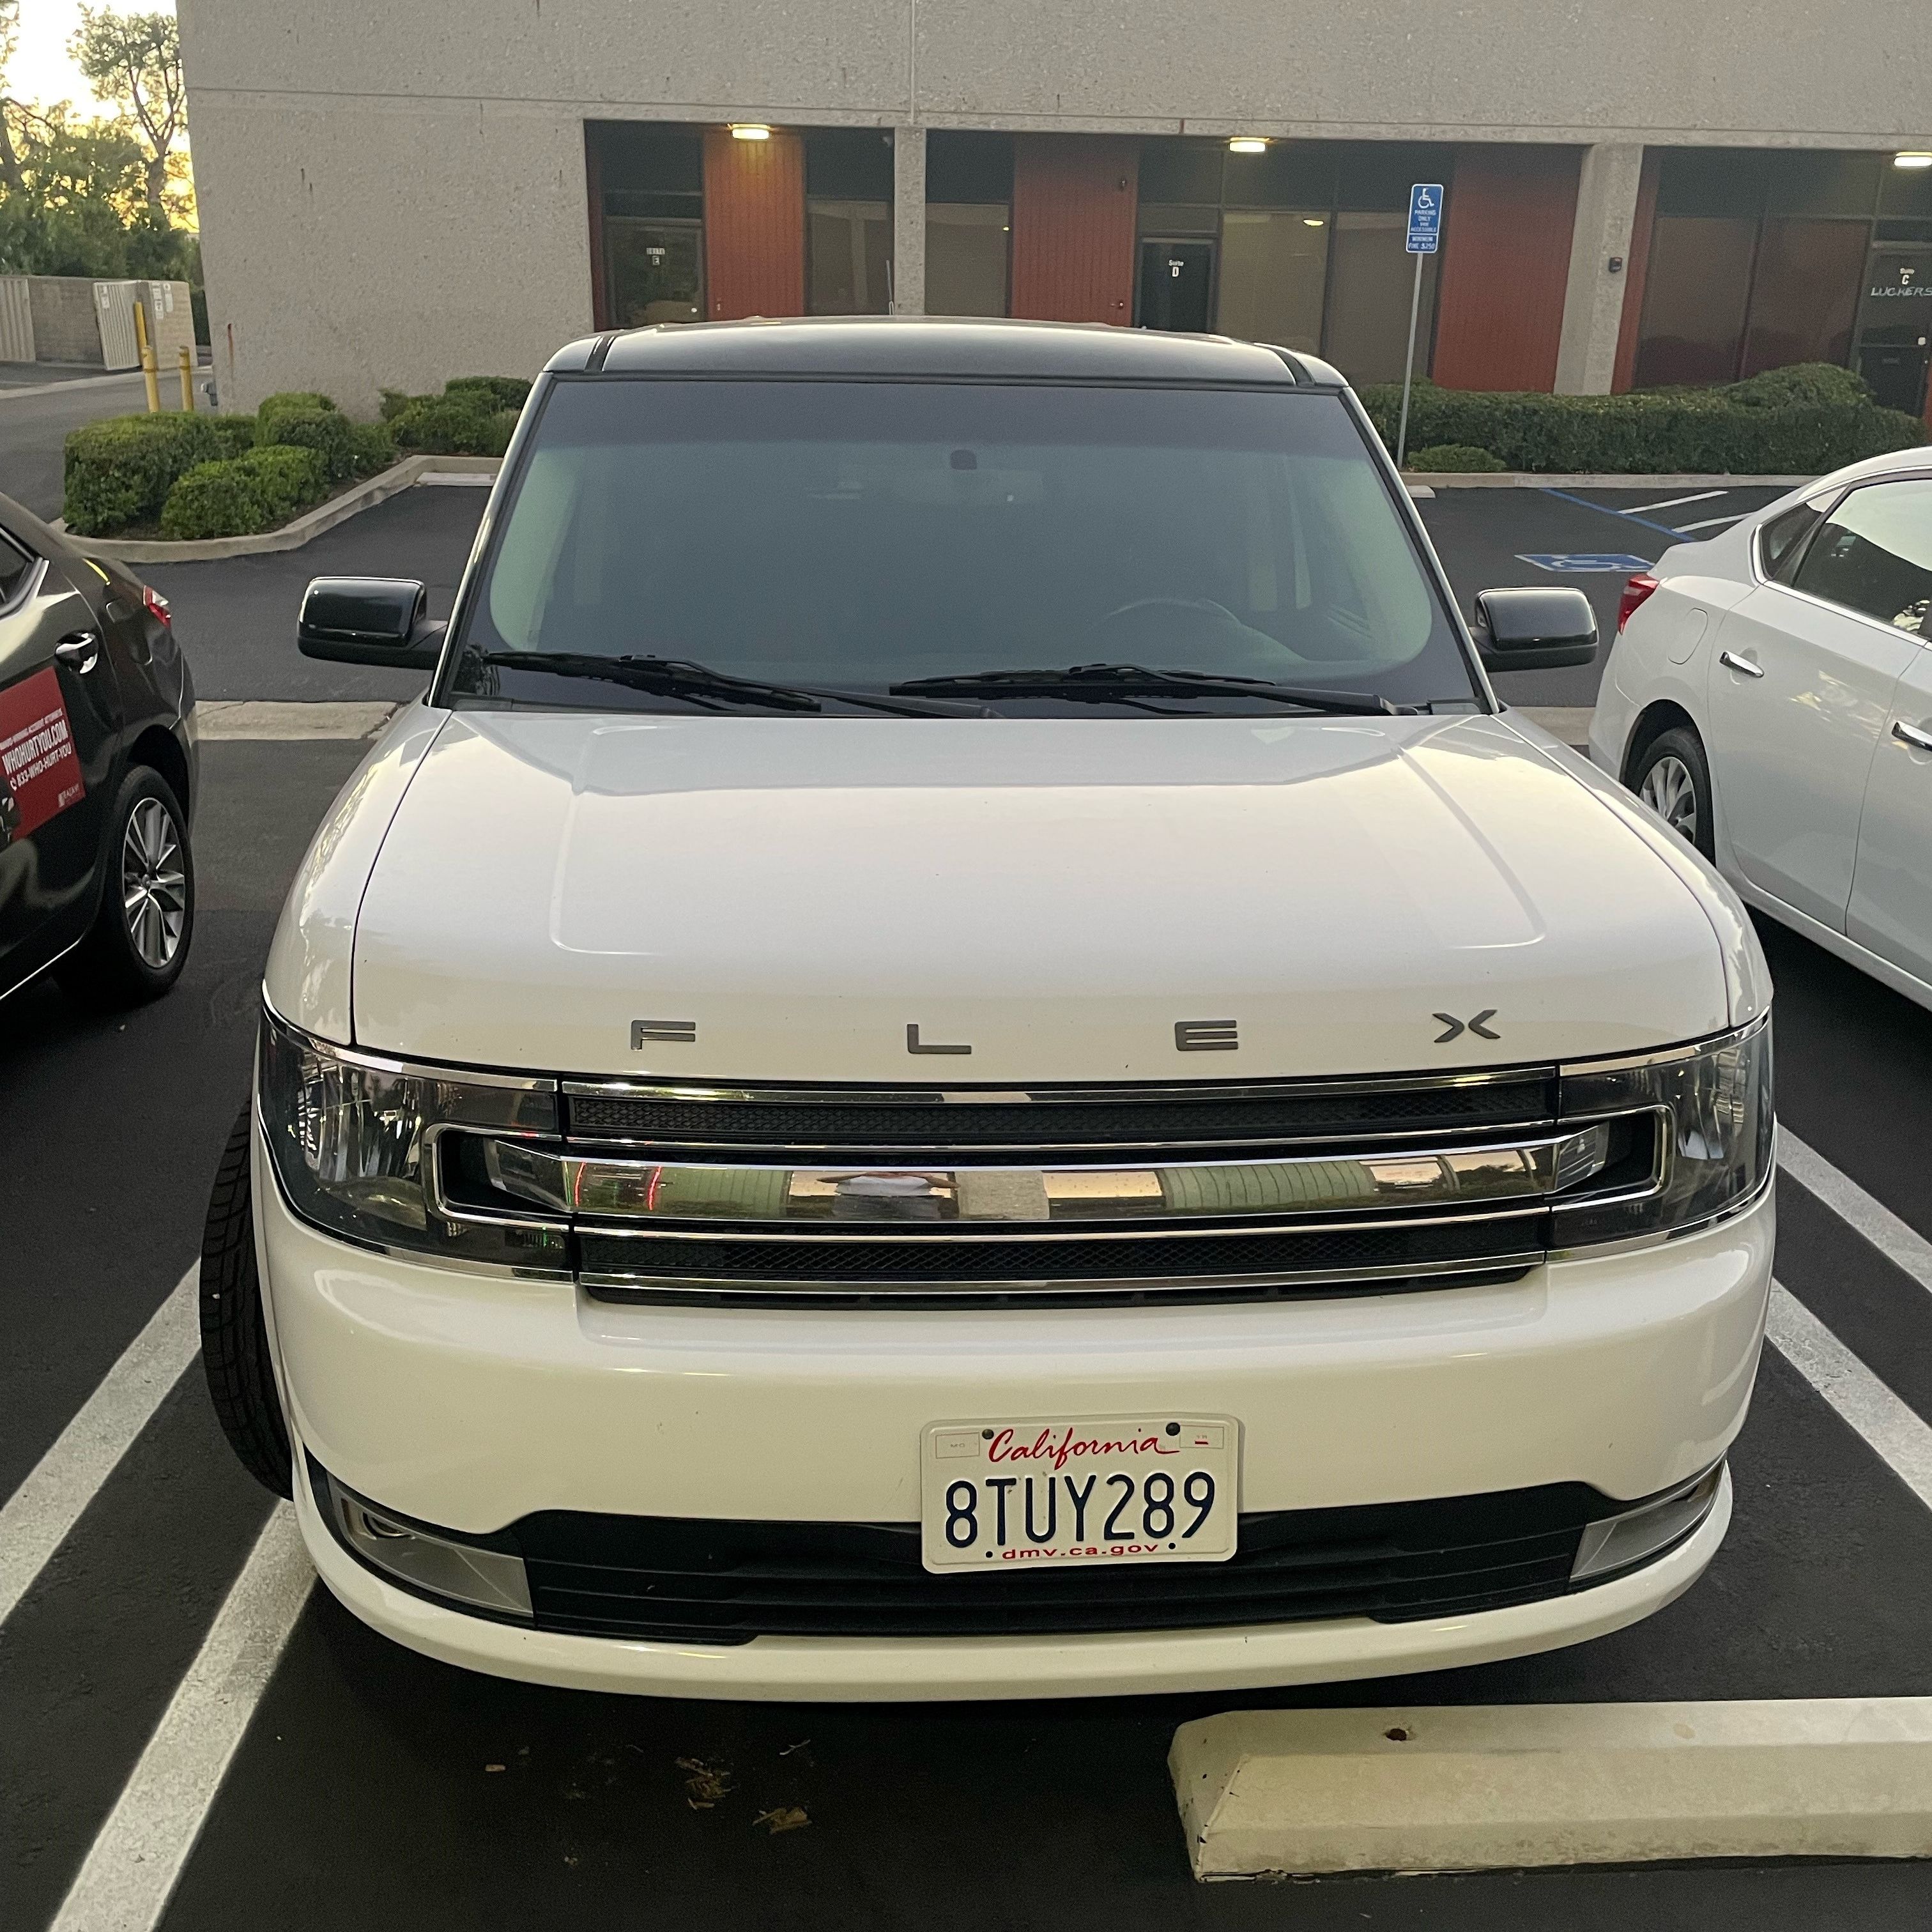 Economy Cars in Rancho Cucamonga, California